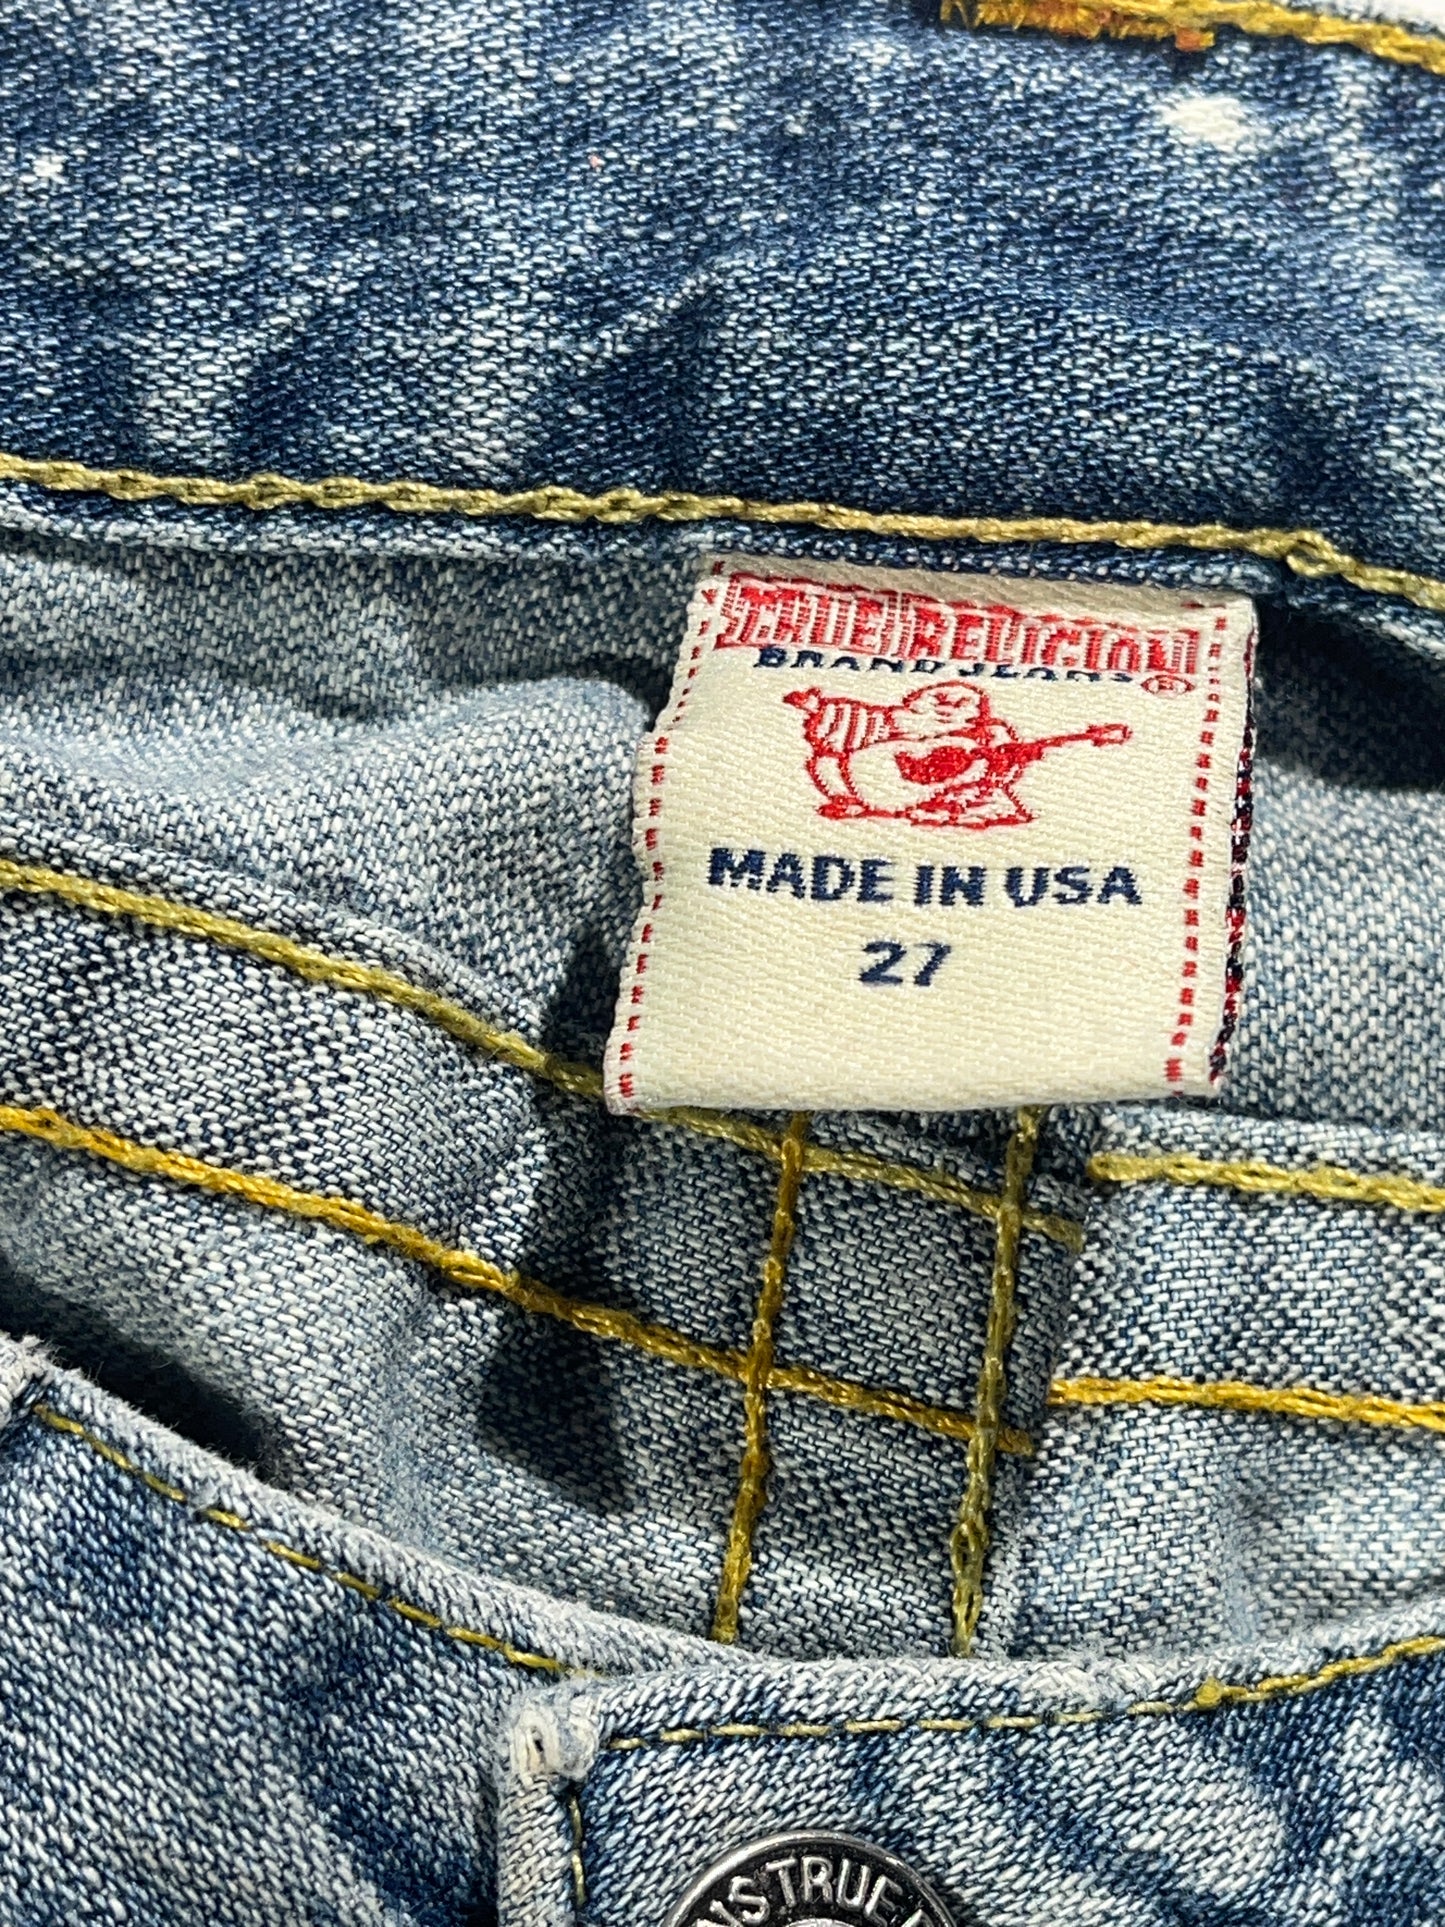 Vintage True Religion Denim Jeans Acid Distressed